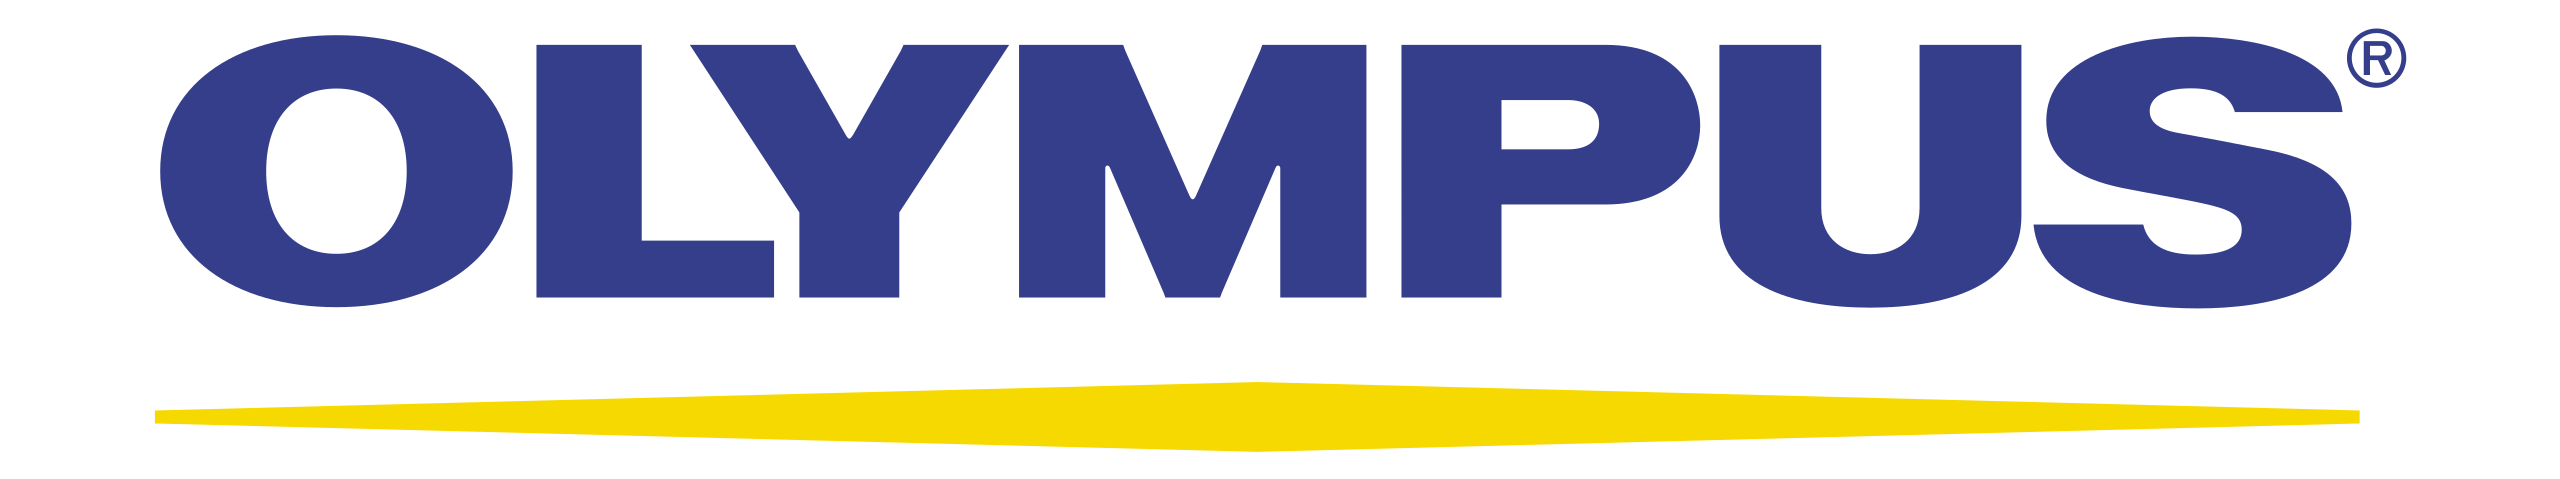 Olympus Corporation Logo.svg